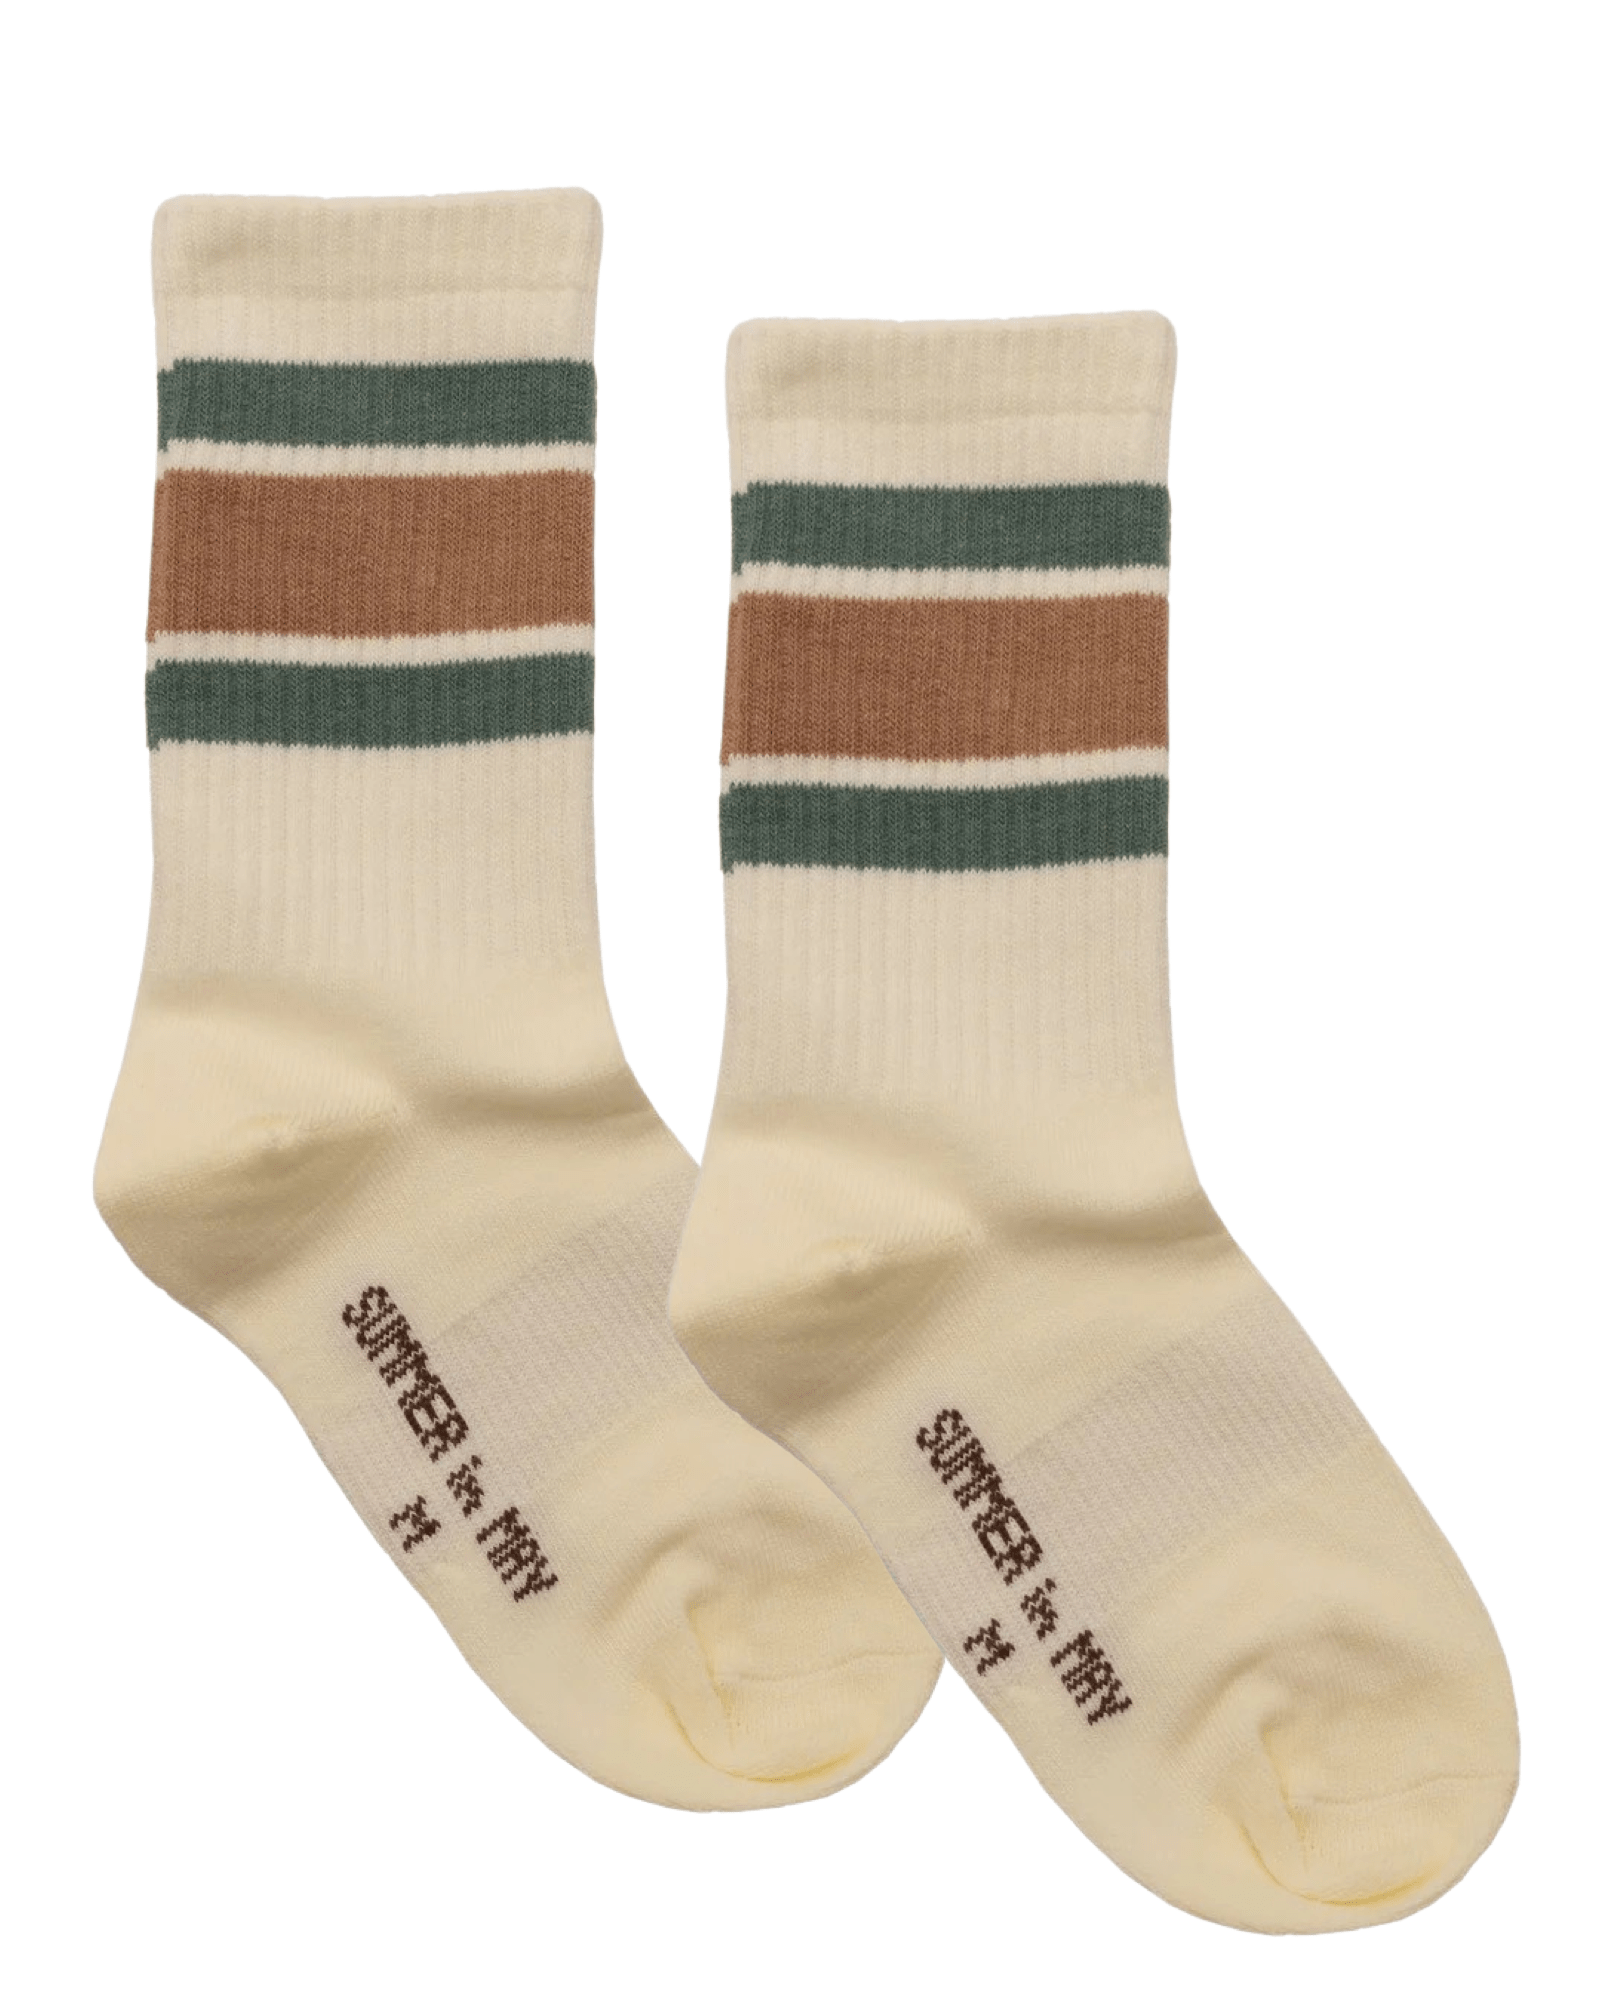 Socks - Granny Smith Cotton Candies